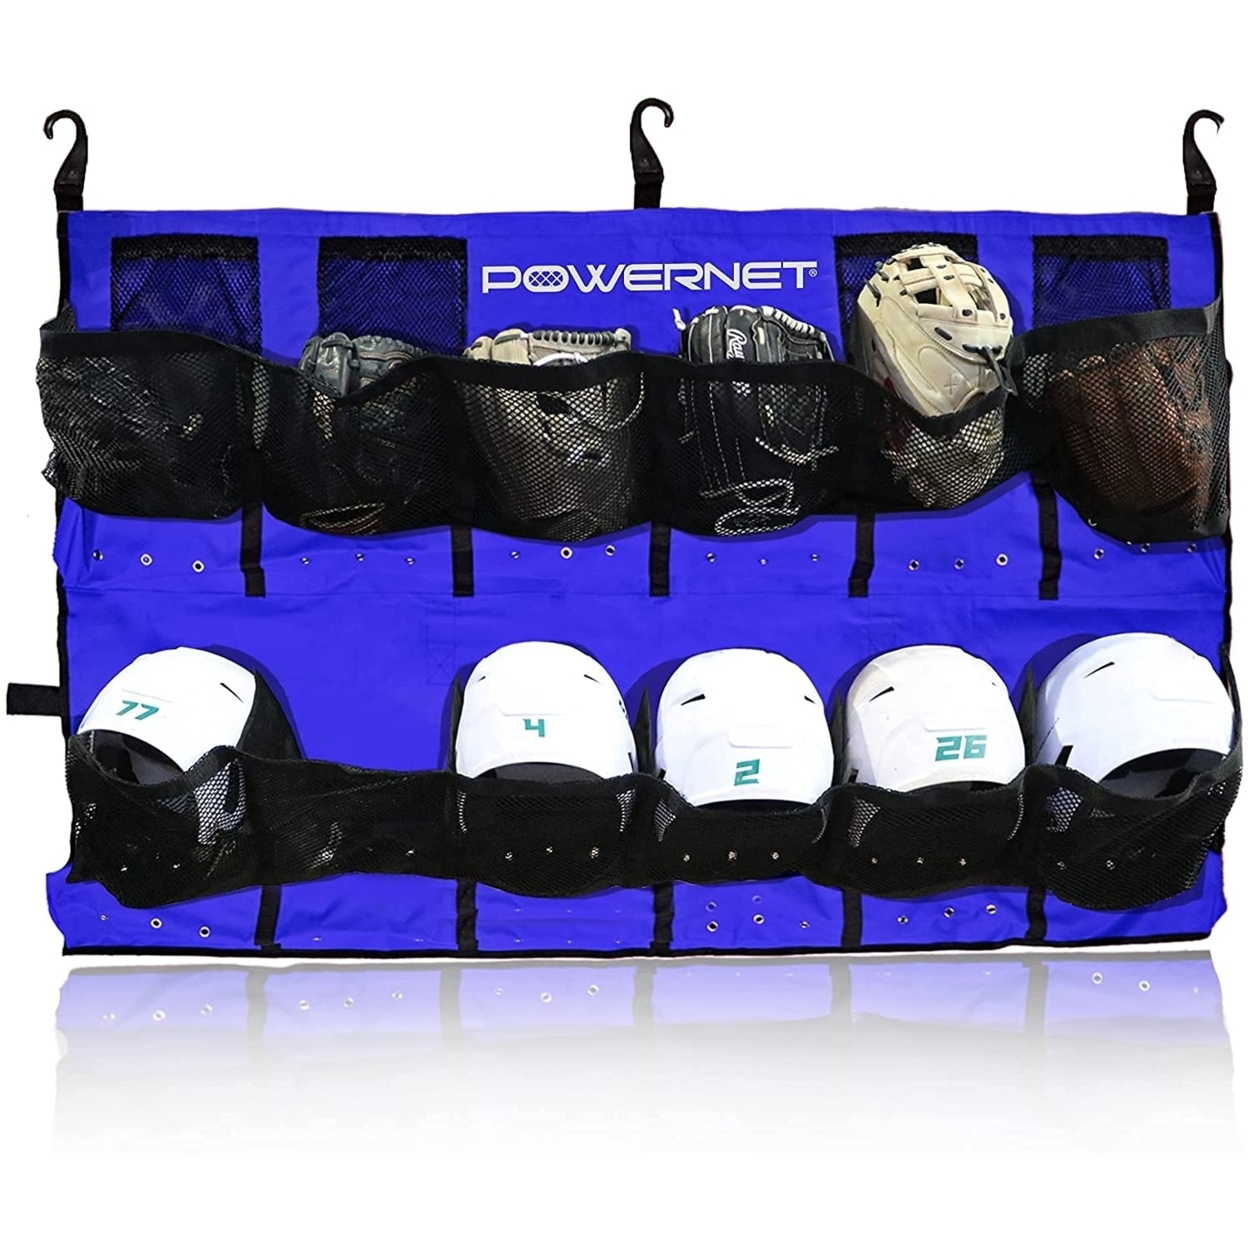 PowerNet PowerPro Hanging Helmet Organizer Bag With Roll-Up Portability (1168) - Royal Blue